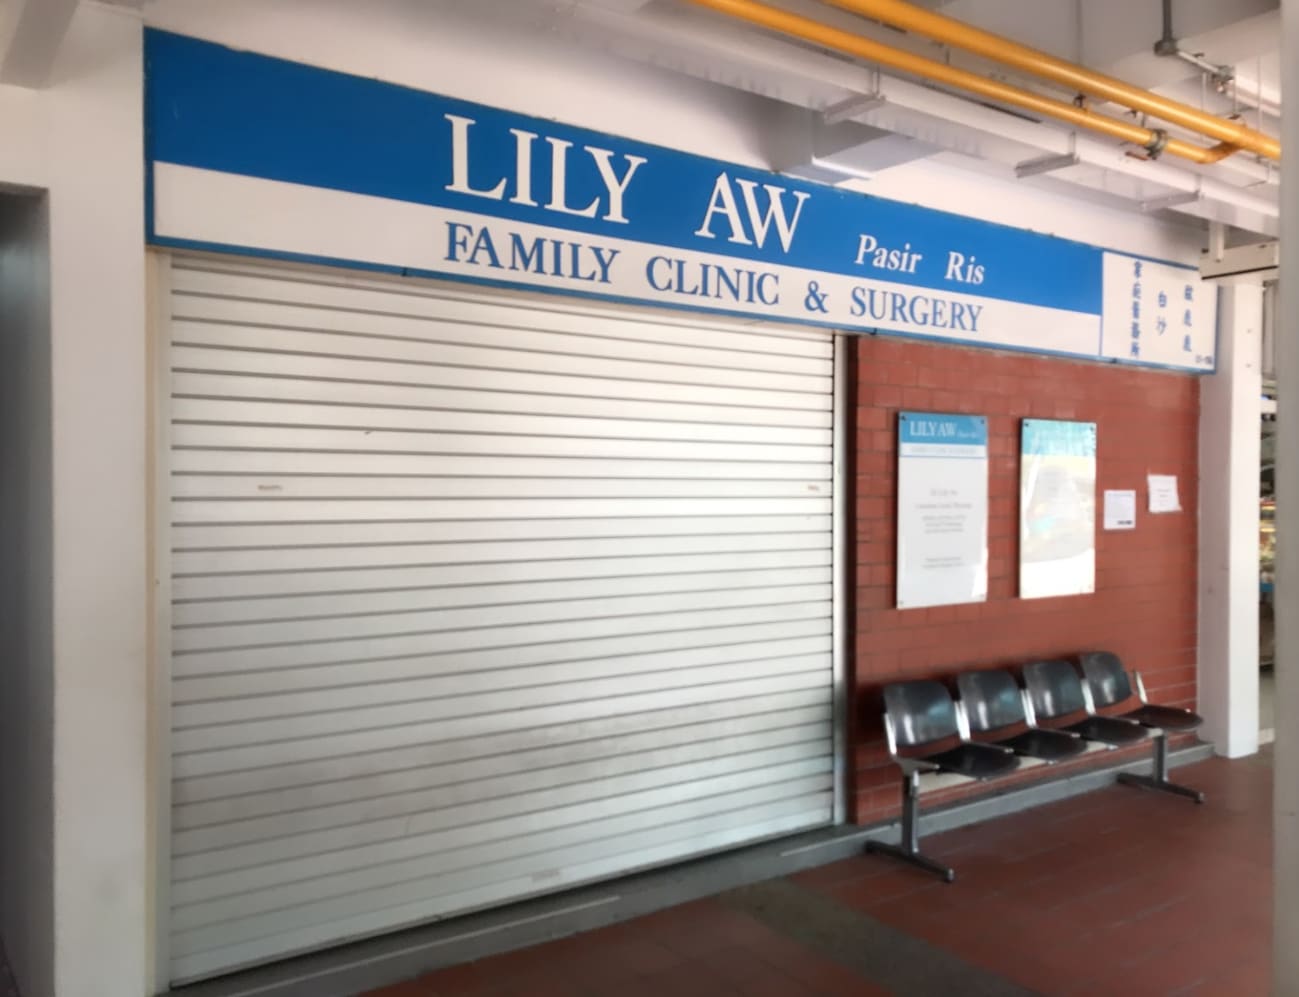 Lily Aw Pasir Ris Family Clinic & Surgery